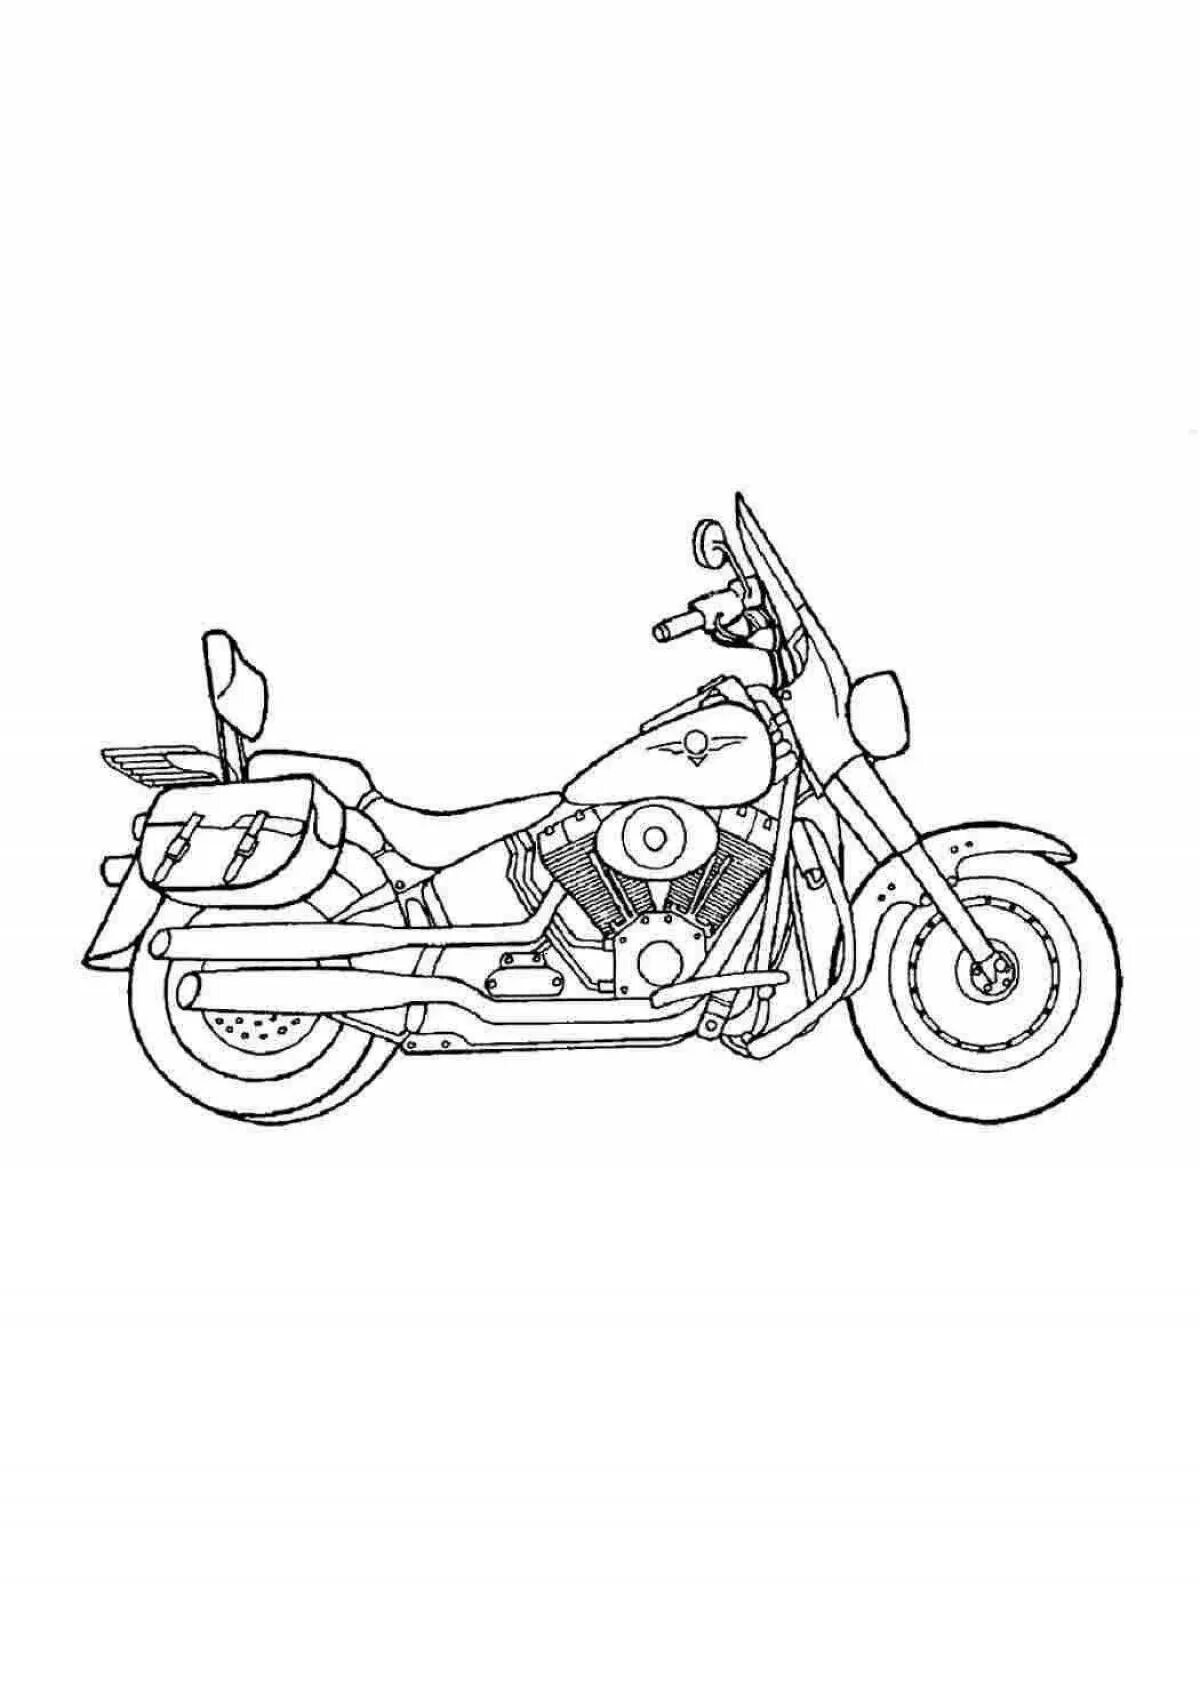 Раскраска мотоцикл ИЖ Планета 5. Раскраска мотоцикл ИЖ Юпитер 5. Раскраска мотоцикл ИЖ Планета 5 с коляской. Раскраска ИЖ Планета 5. Планета 5 раскраска